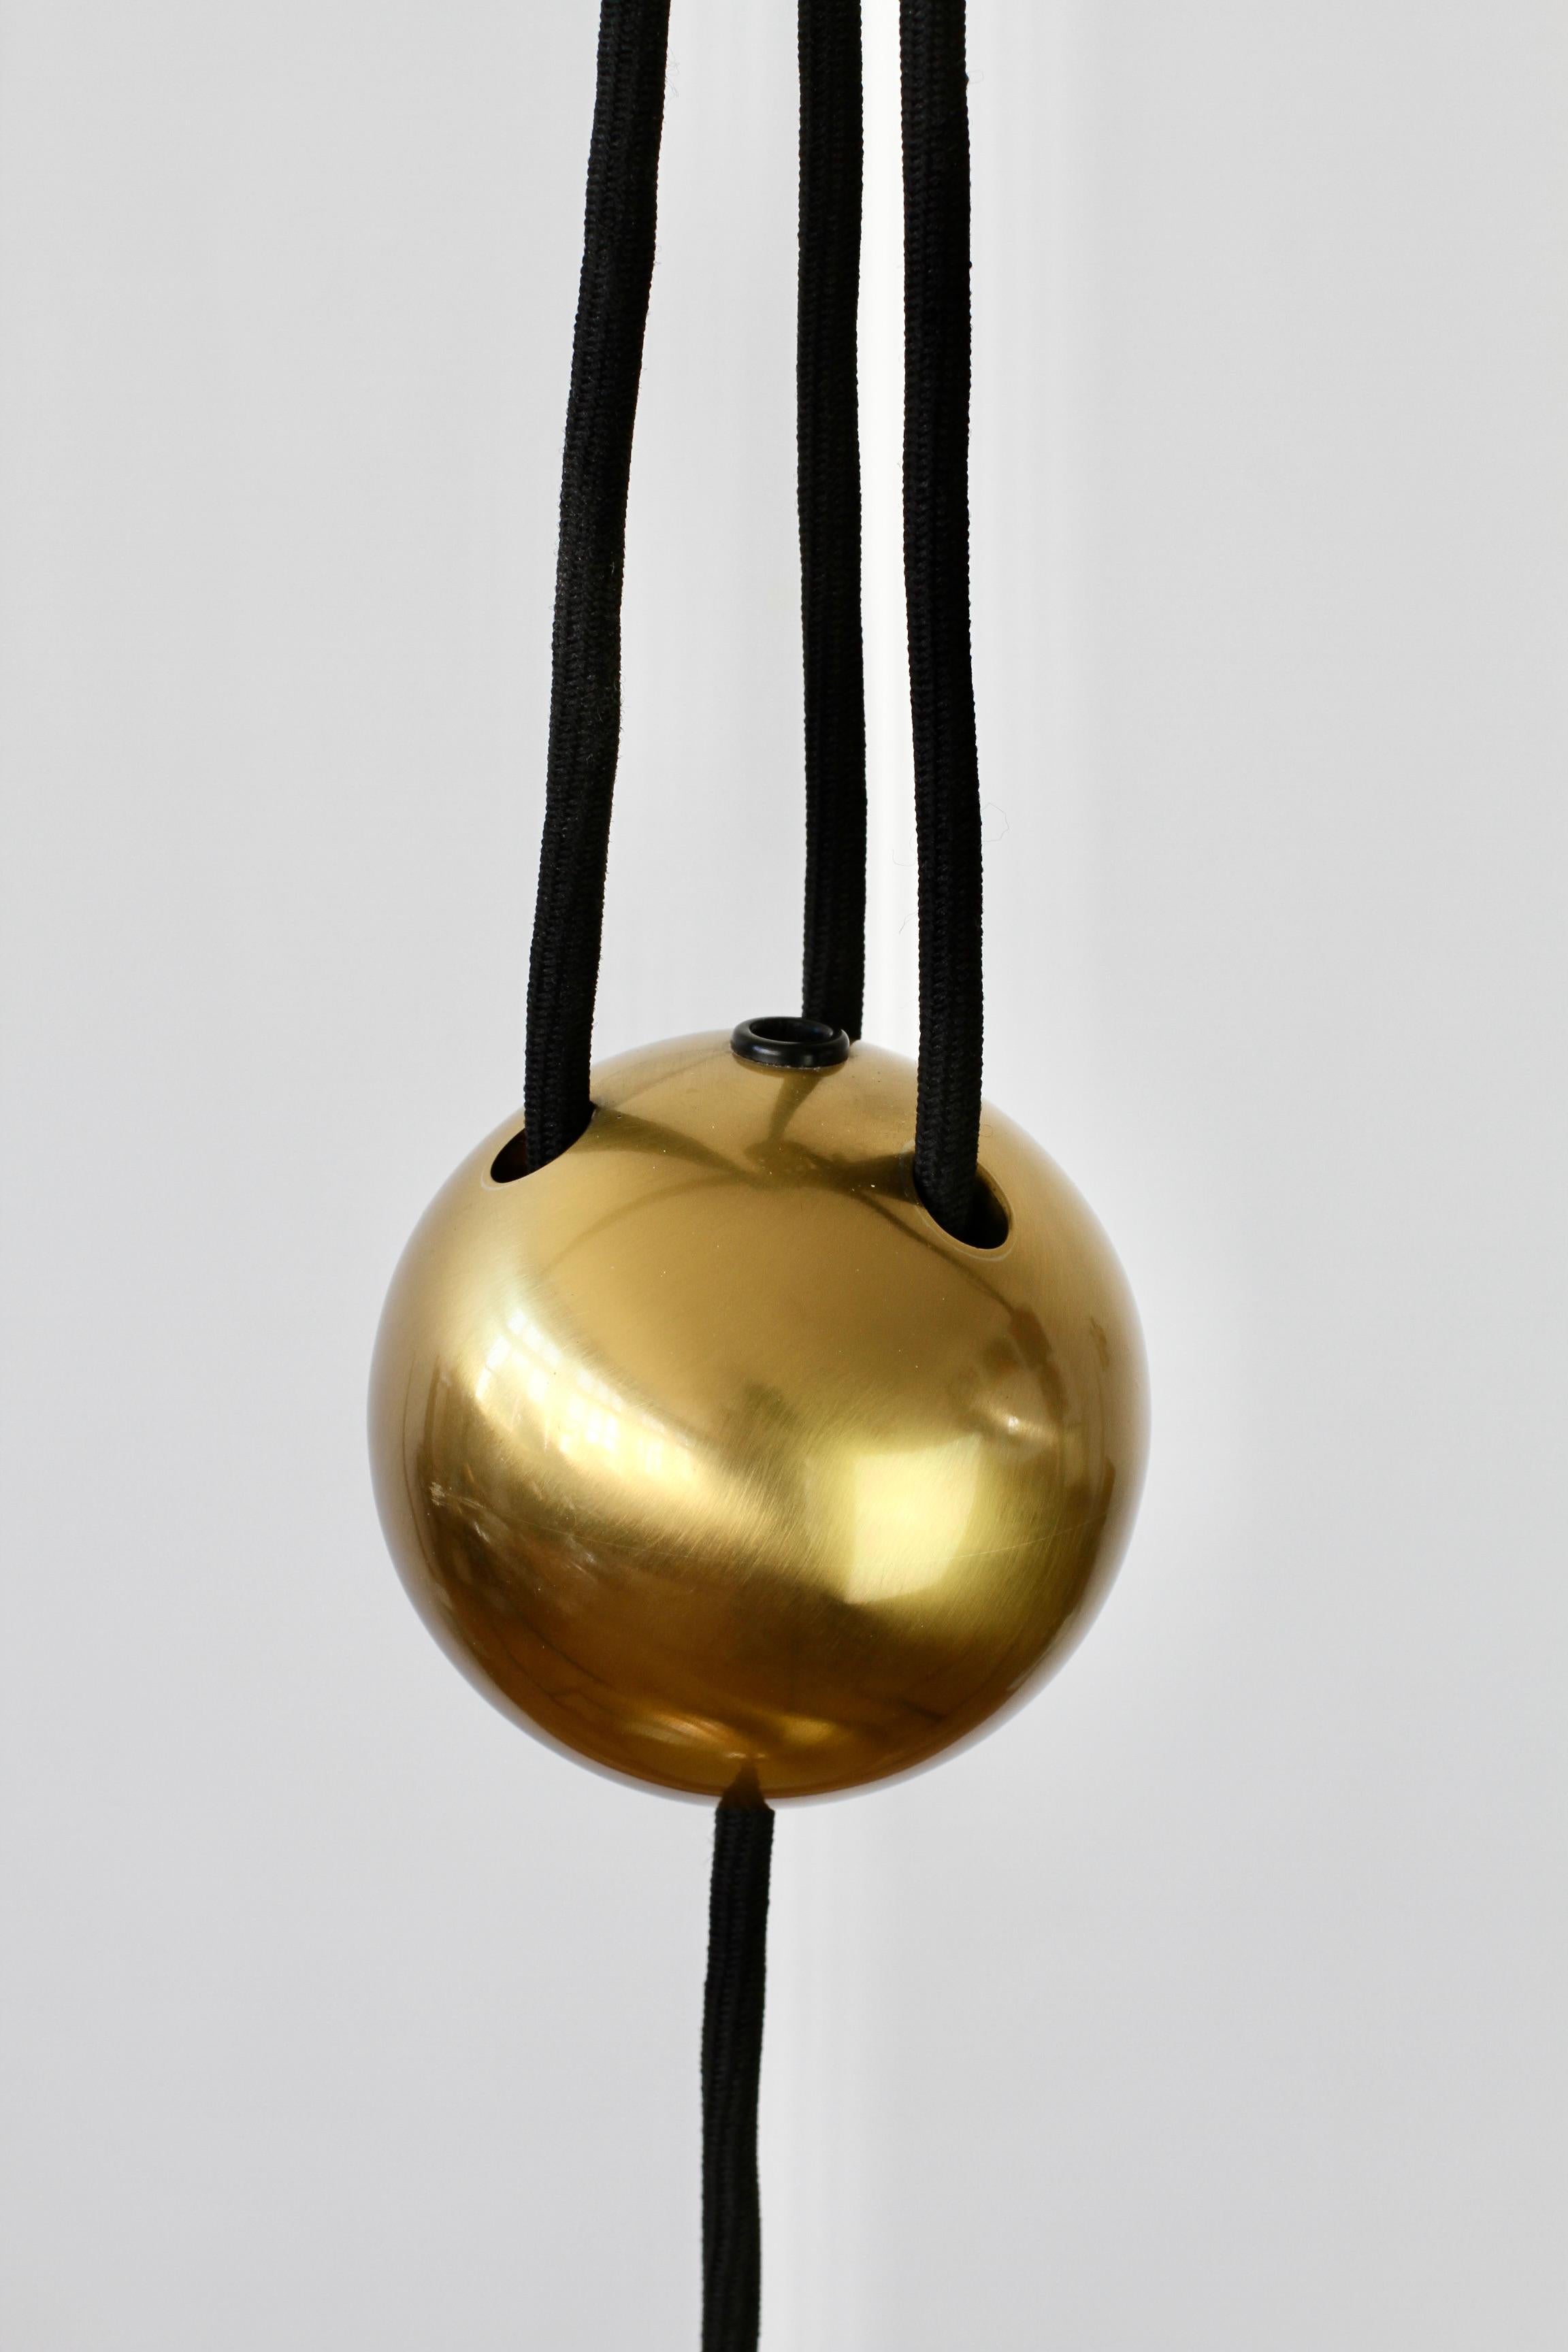 Florian Schulz Vintage Modernist Brass Counterbalanced Adjustable Pendant Light For Sale 4